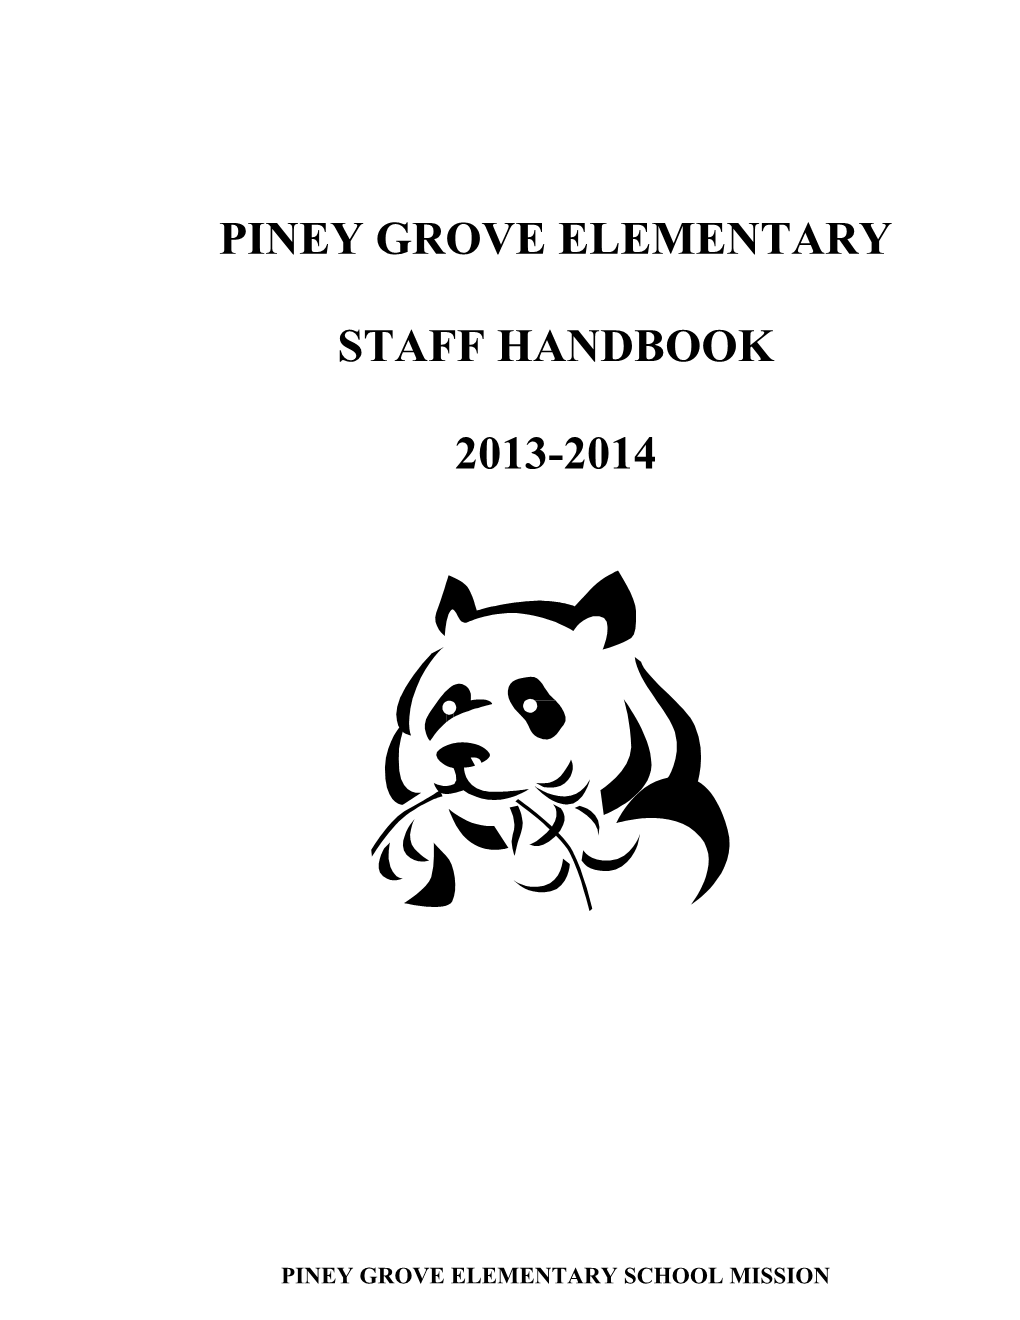 Piney Grove Elementary